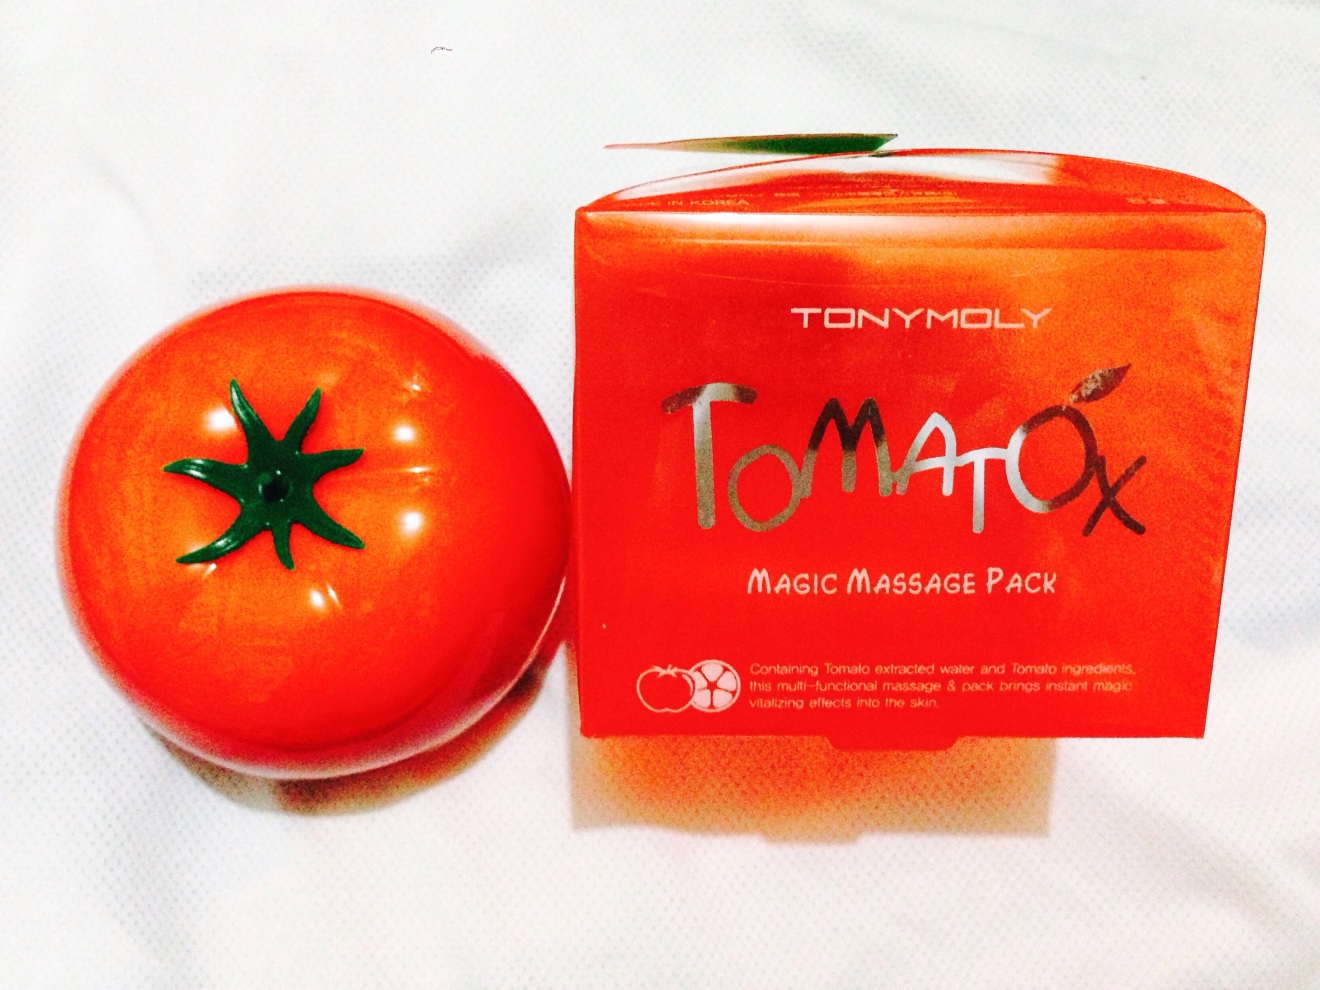 Massage magic. Тони моли маска помидор. Тони моли Томатокс. Маска Томатокс Тони моли. Tony Moly с томатом.